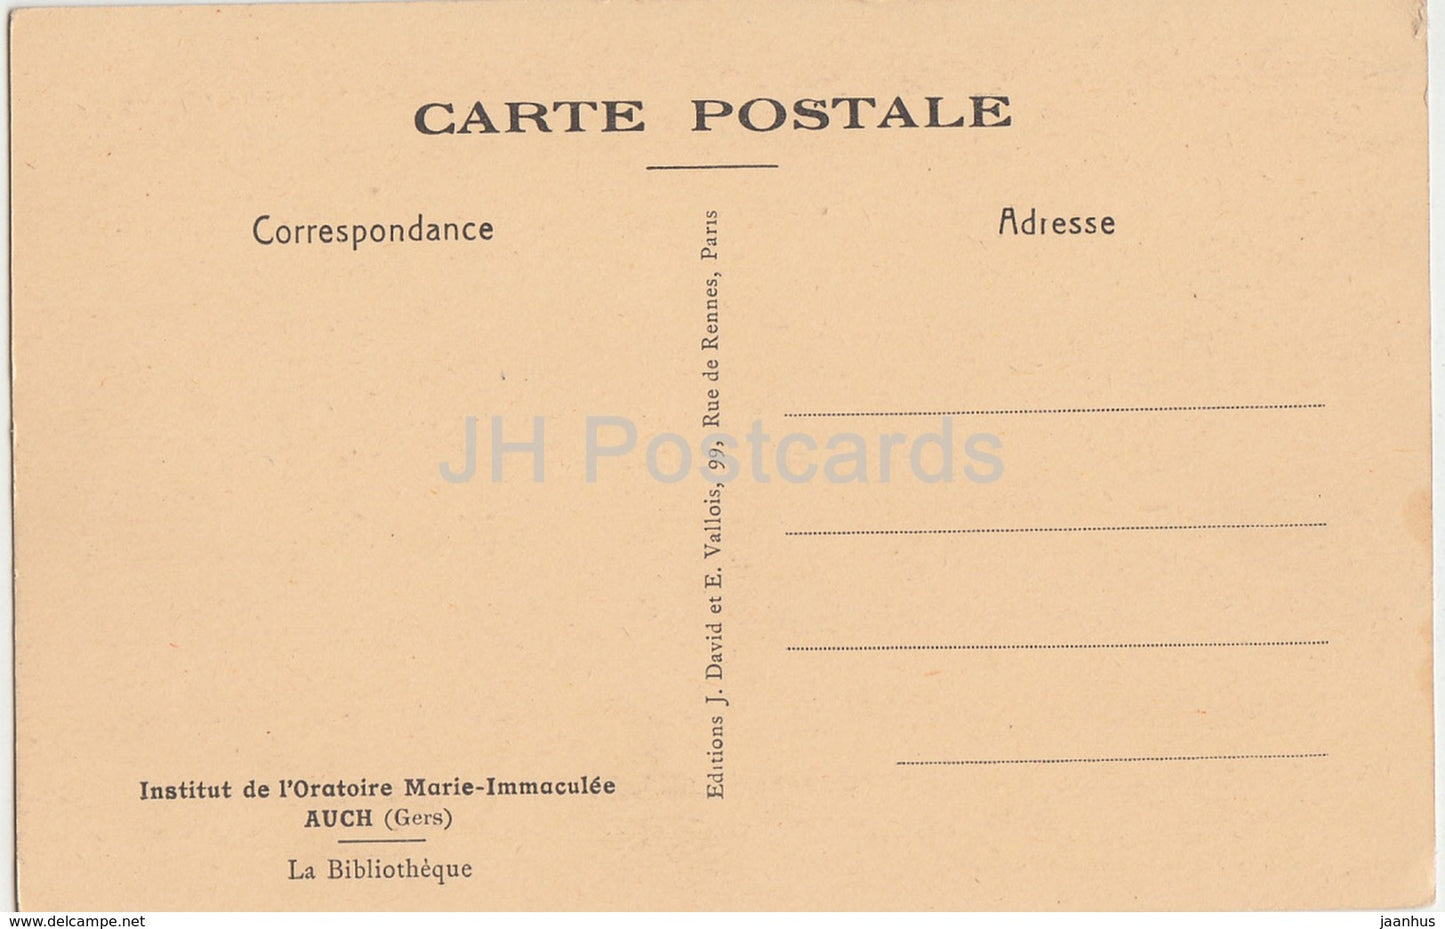 Auch - Institut de l'Oratoire Marie Immaculee - La Bibliotheque - library - old postcard - France - unused